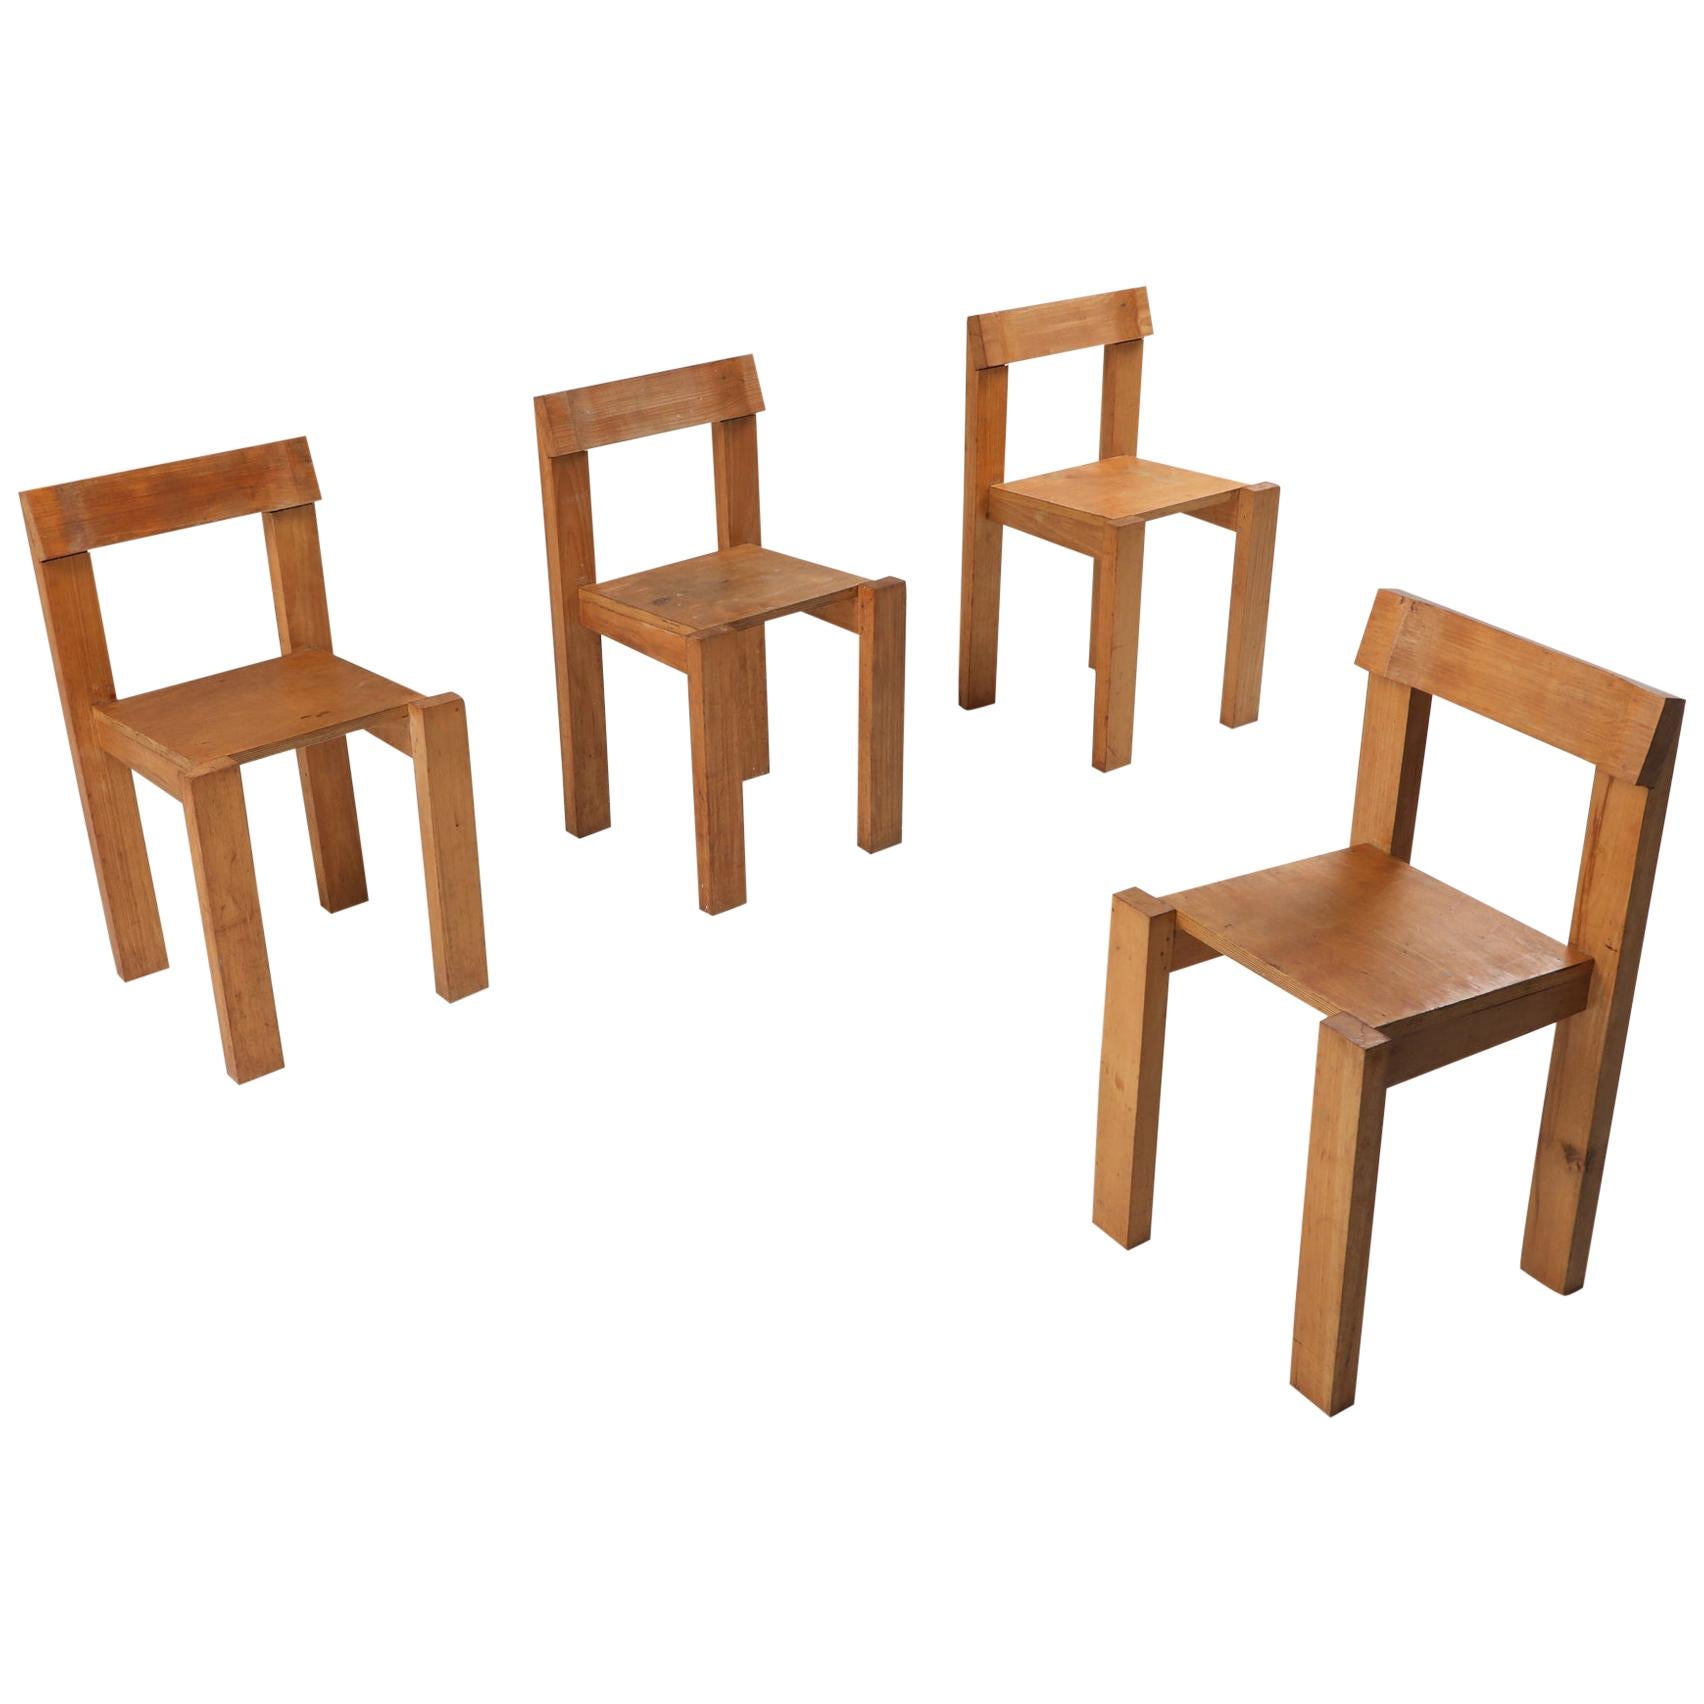 Naturalist Modern Prototype Chairs